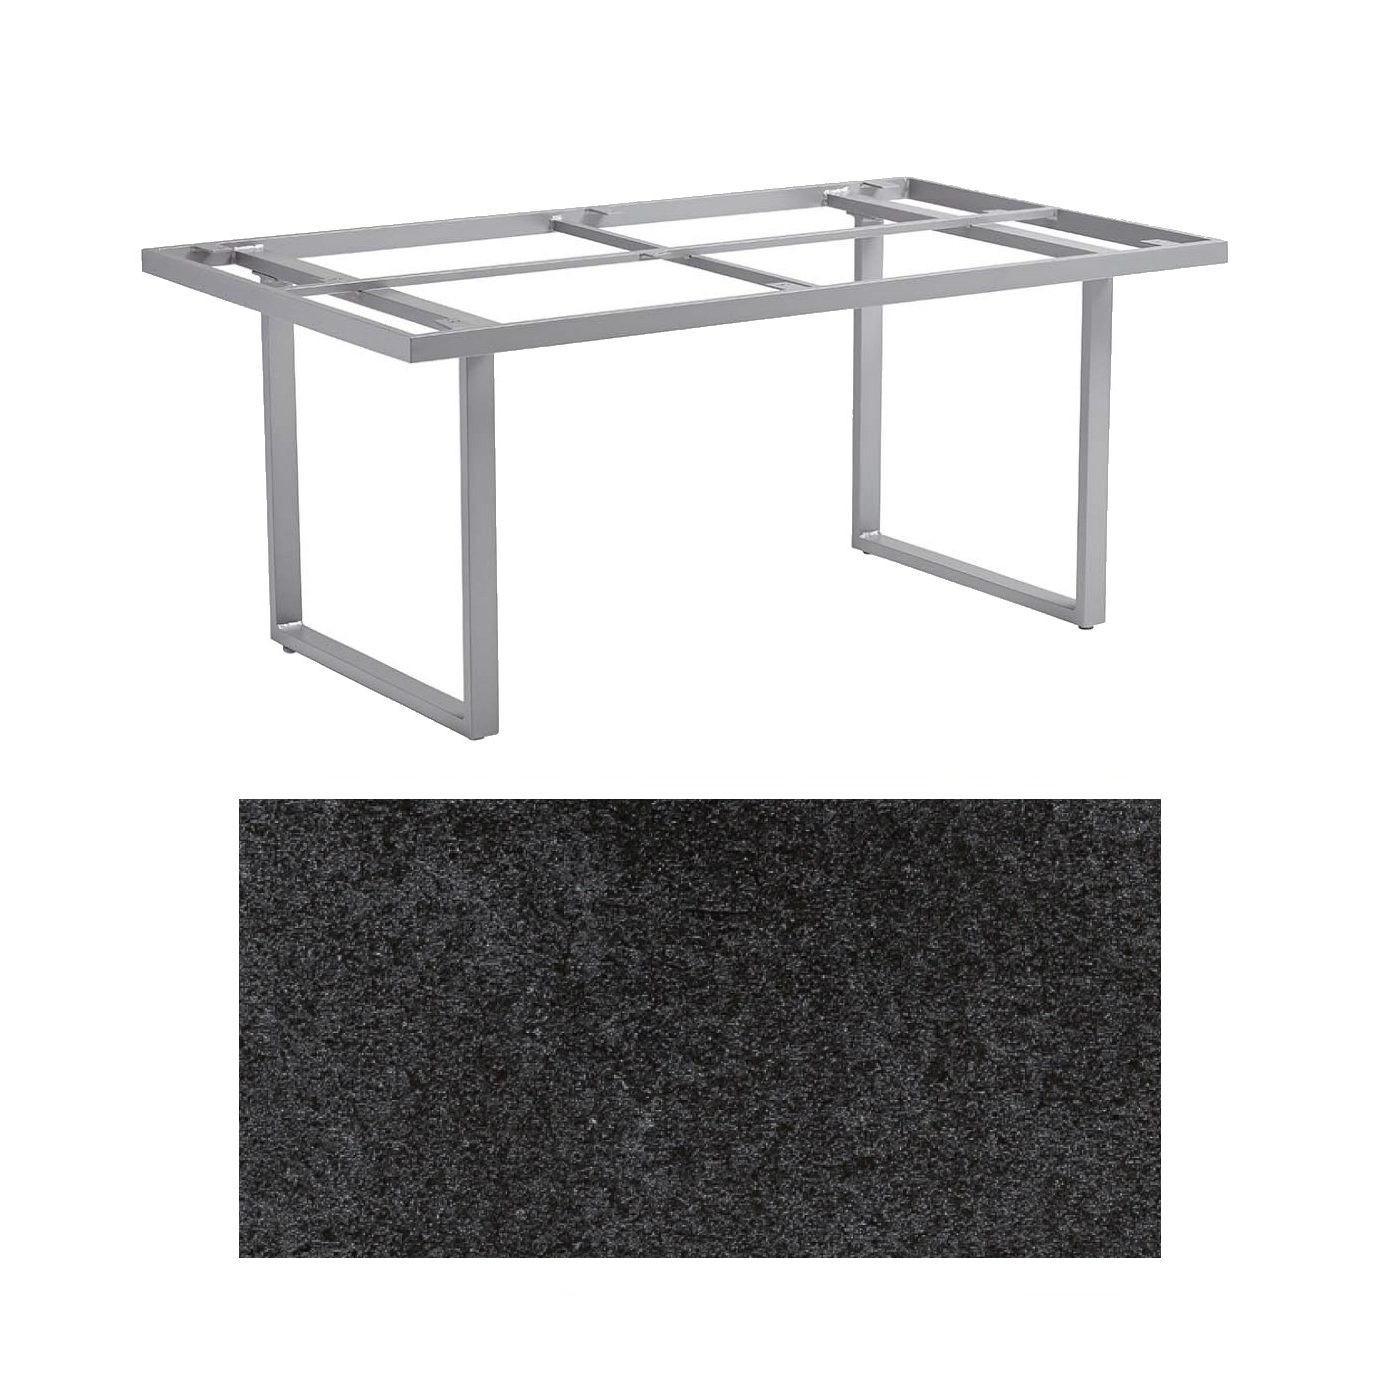 Kettler "Skate" Gartentisch Casual Dining, Gestell Aluminium silber, Tischplatte HPL Stahl, 160x95 cm, Höhe ca. 68 cm